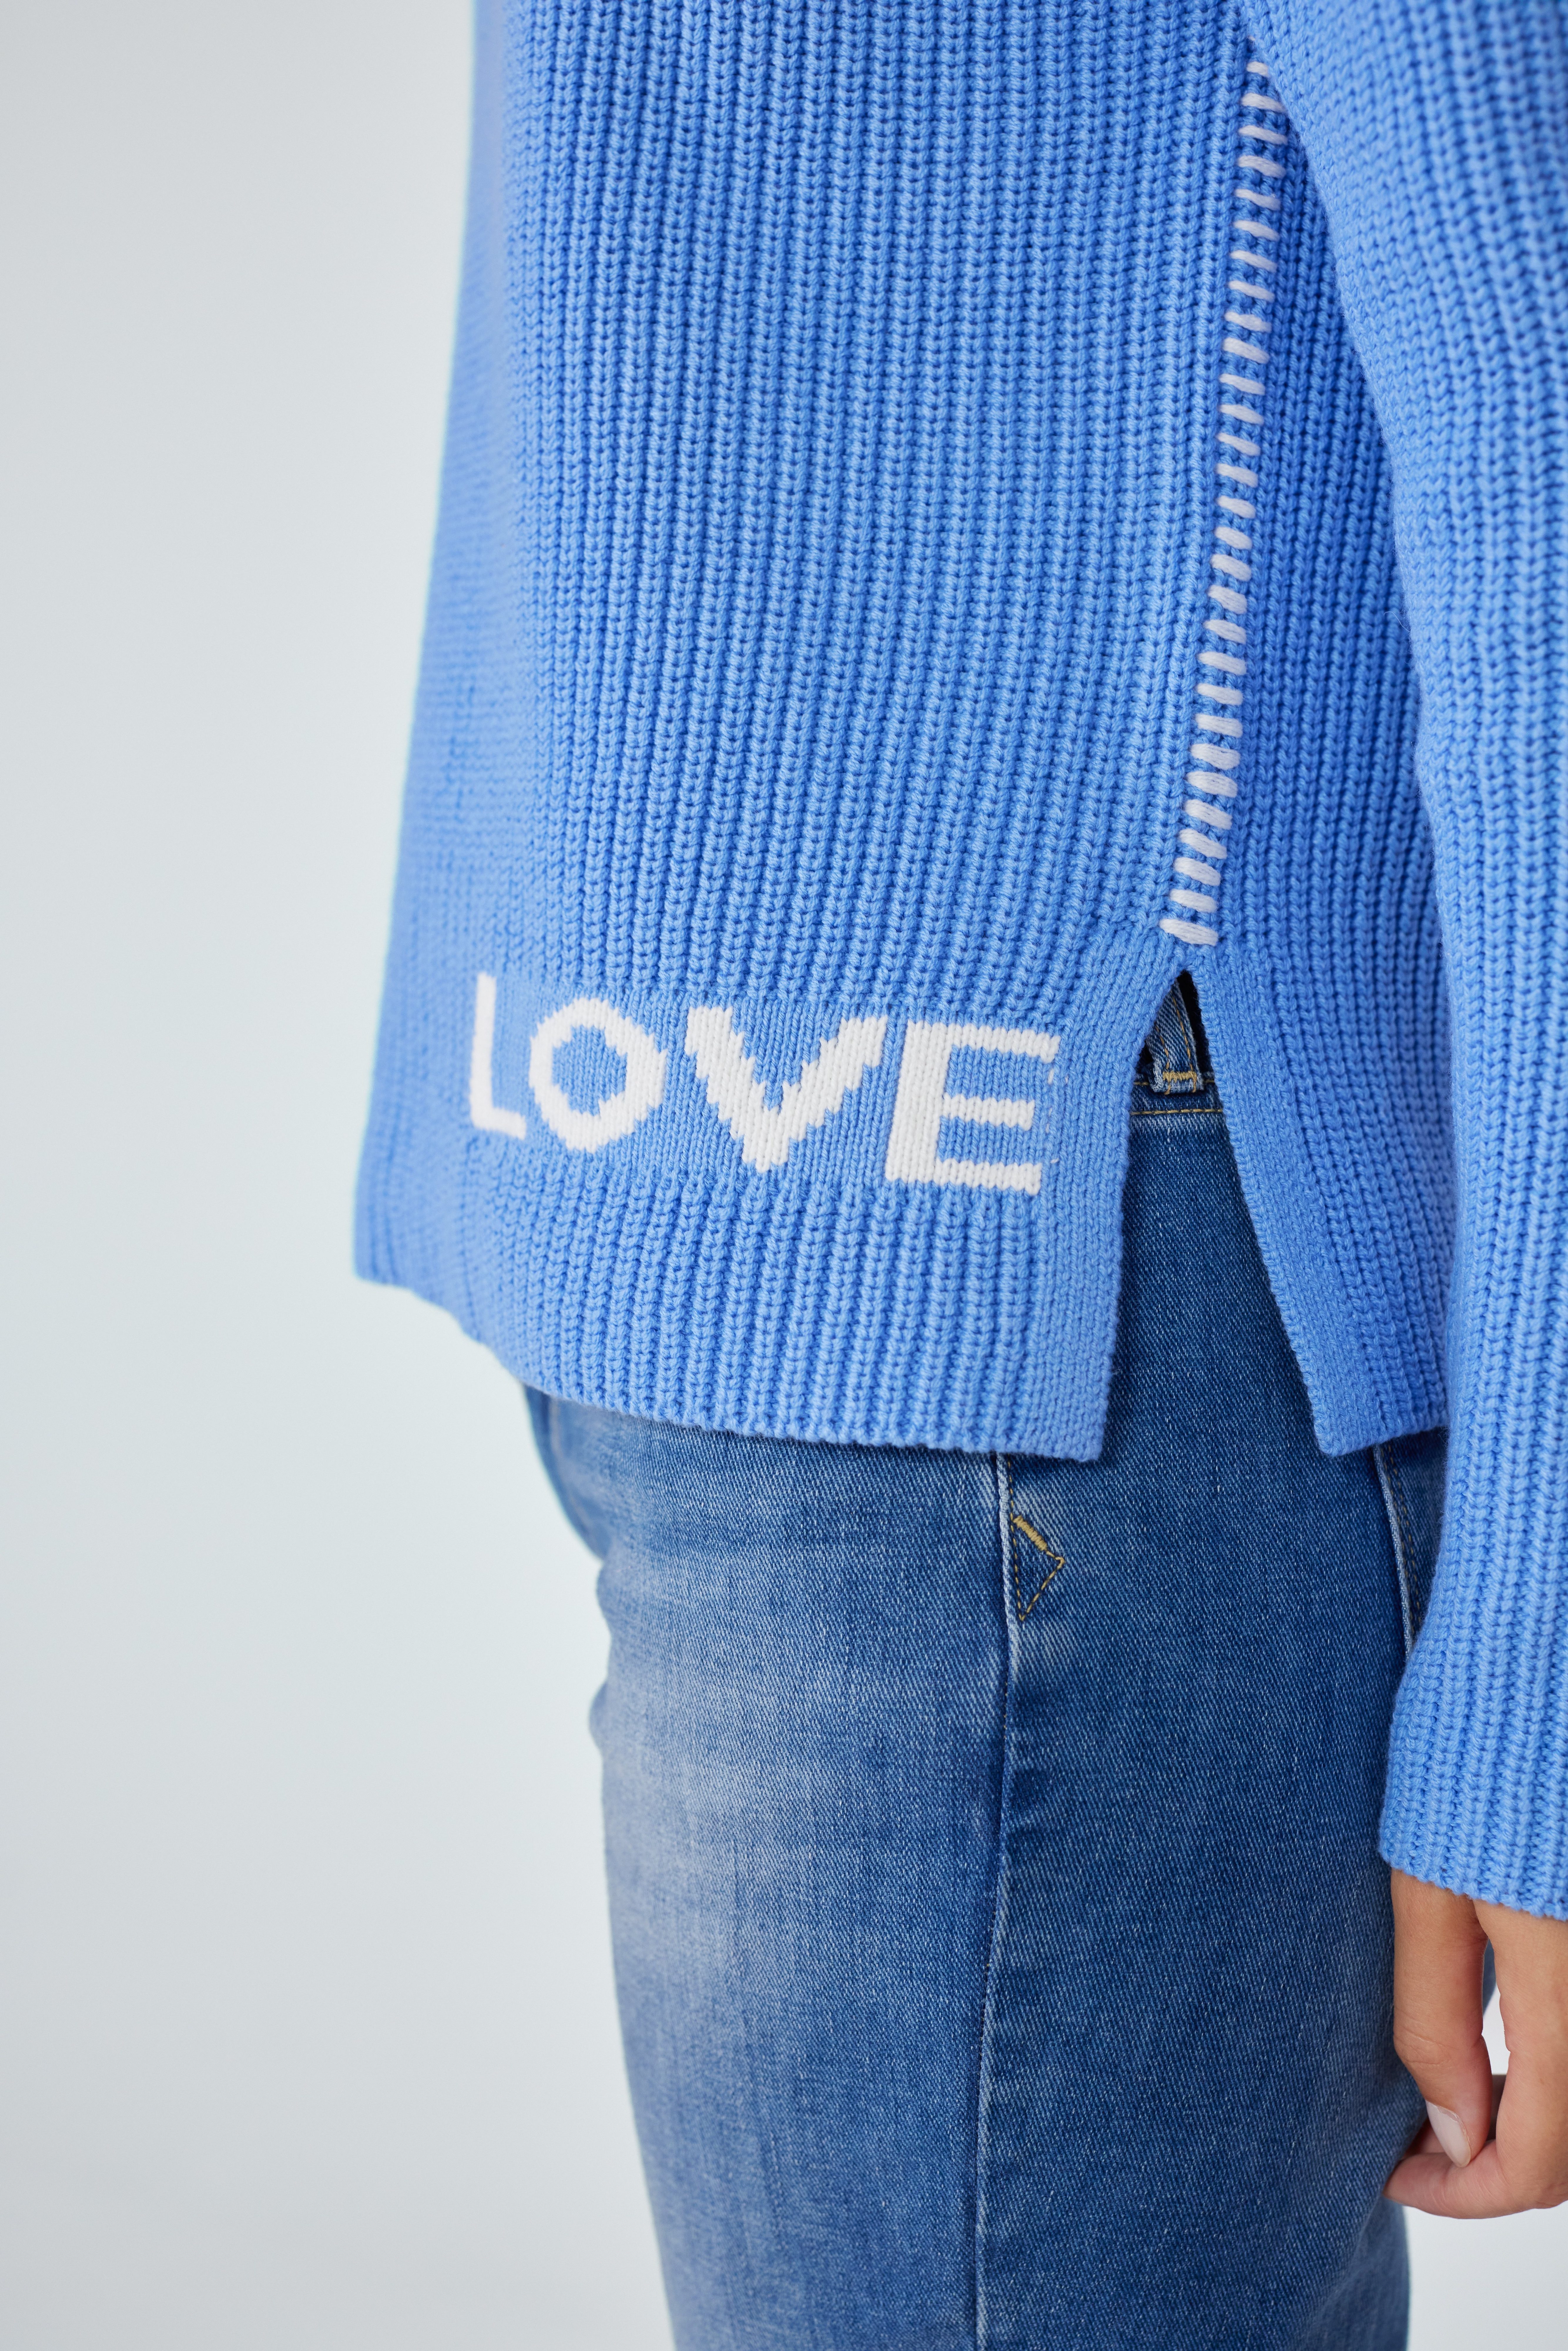 air Nähten BlendaL Lieblingsstück kontrastafarbenen blue "LOVE" mit Stehkragenpullover & Schriftzug